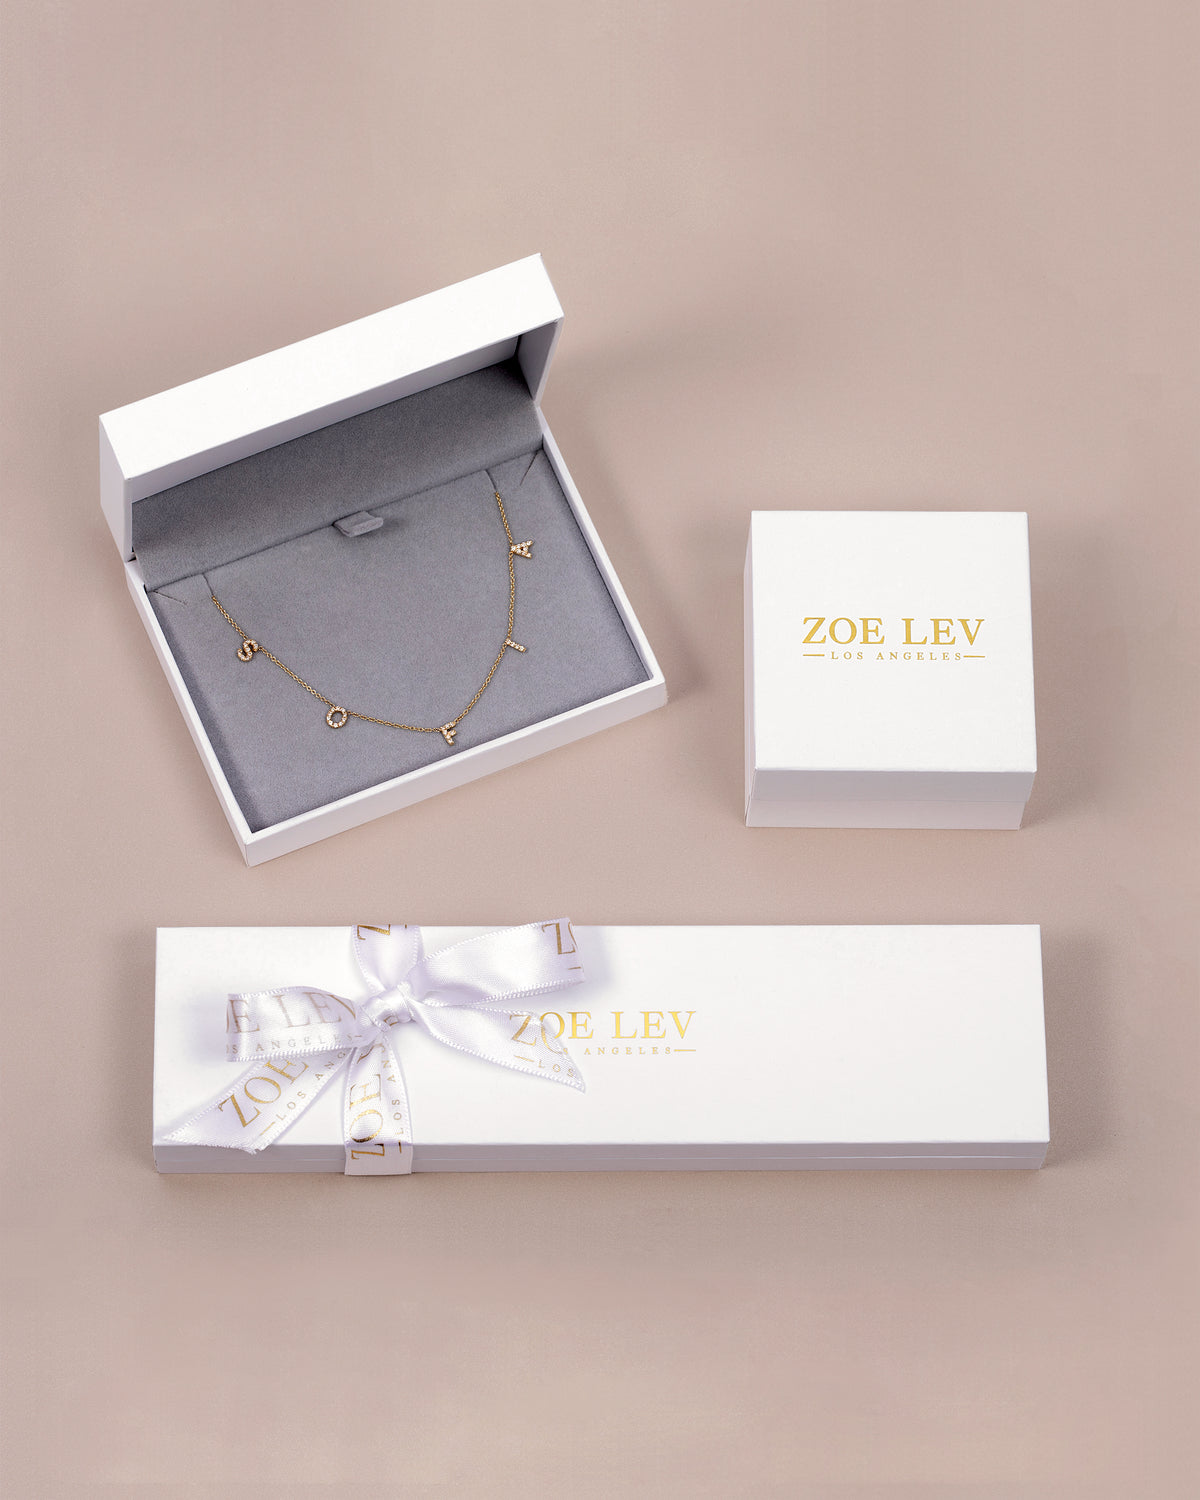 14k Gold Mini Wishbone Necklace